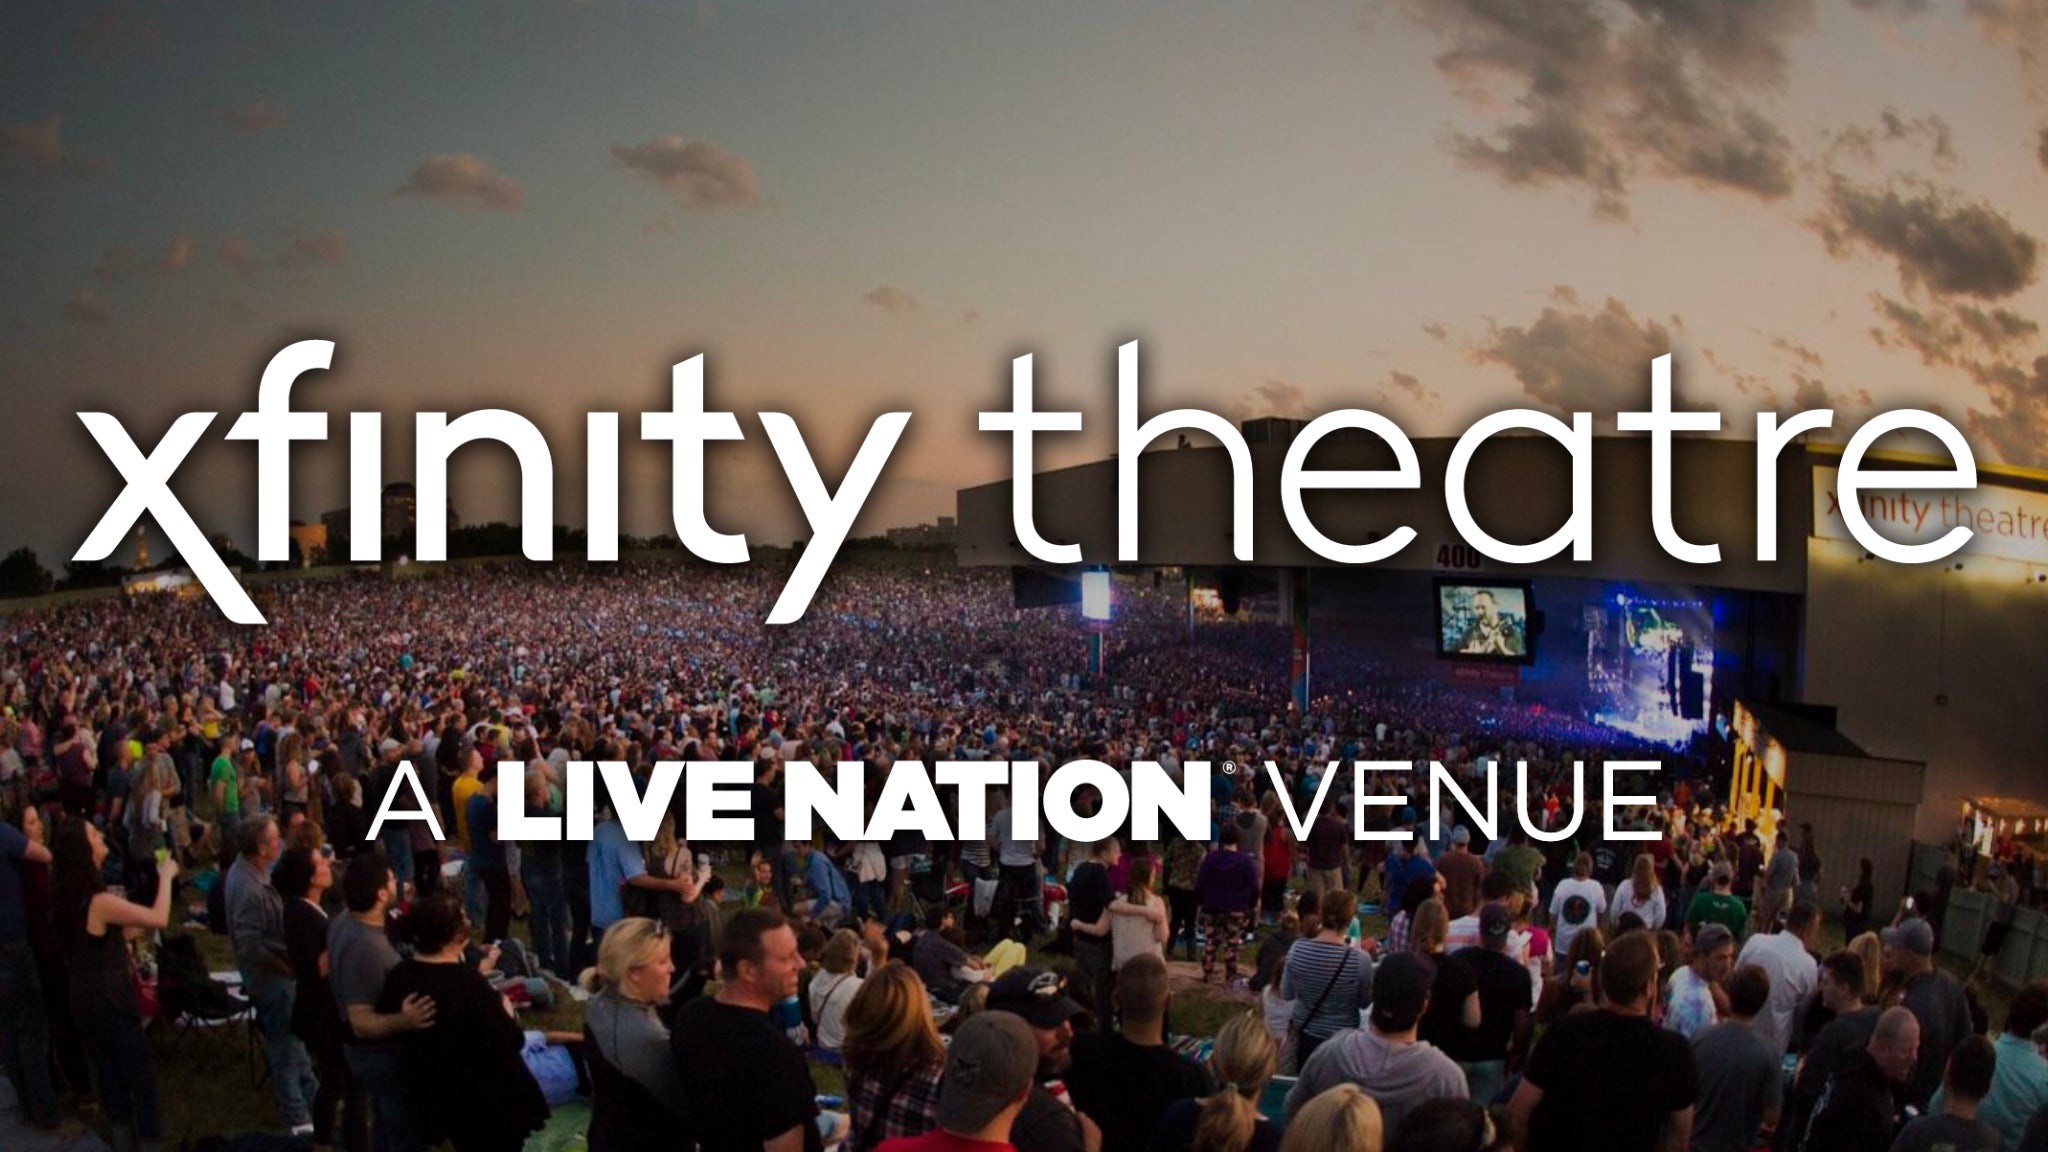 XFINITY Theatre - 2020 show schedule & venue information - Live Nation